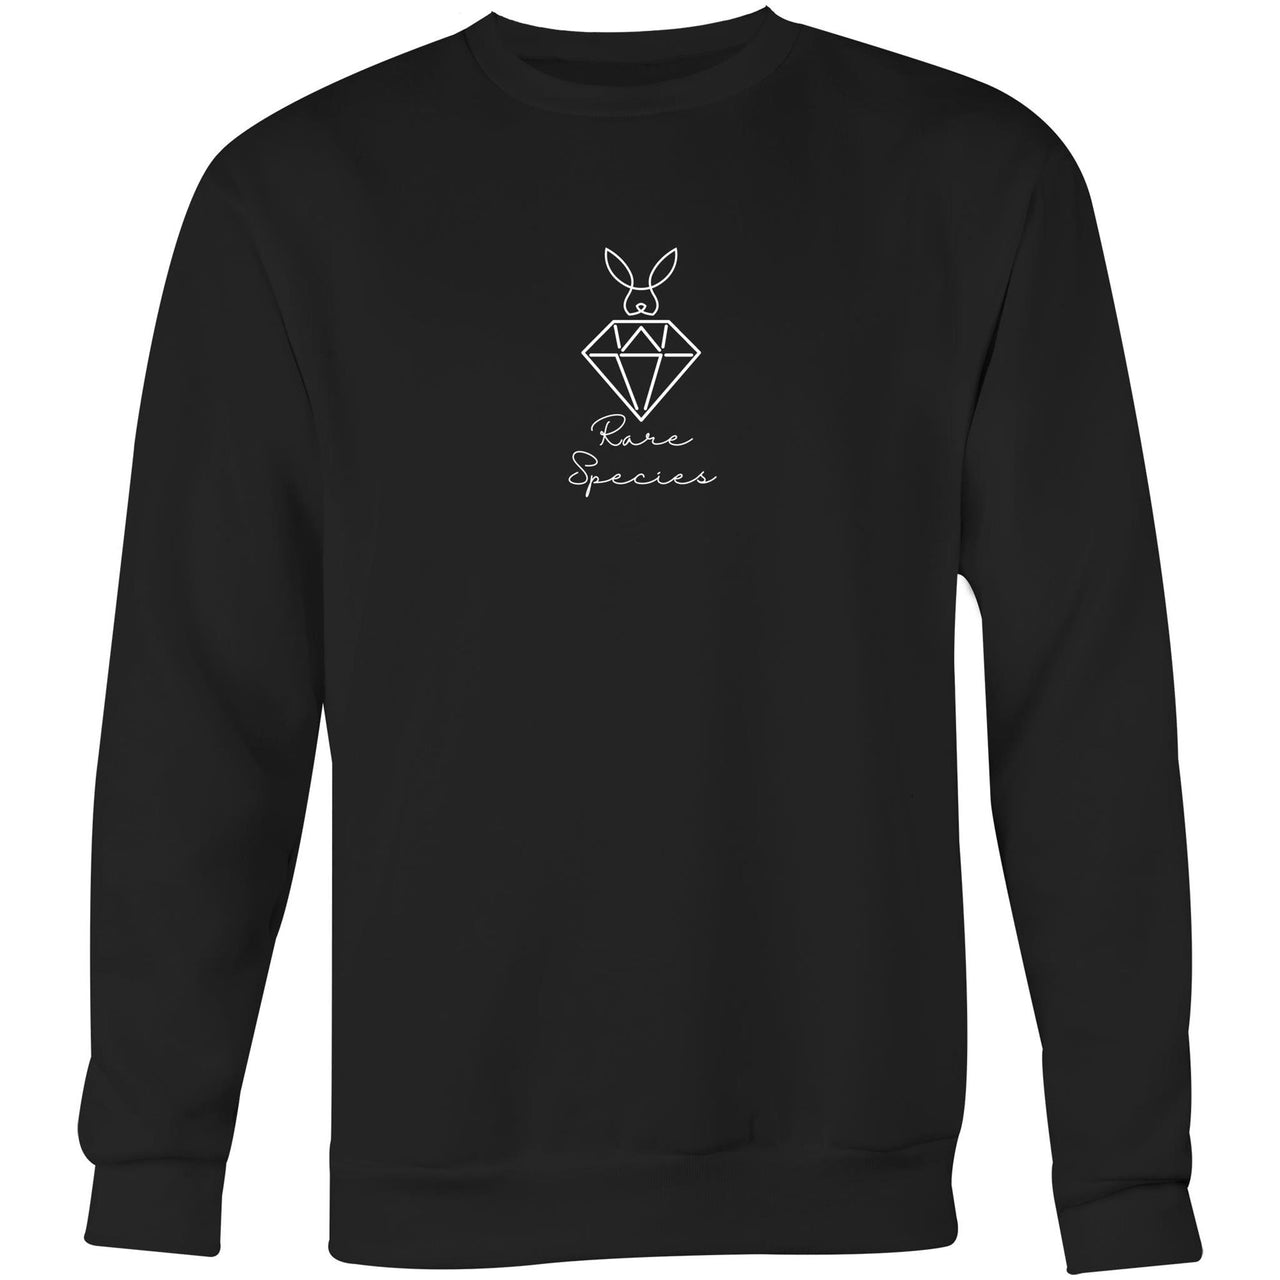 CBF Rare Species Crew Sweatshirt black by CBF Clothing